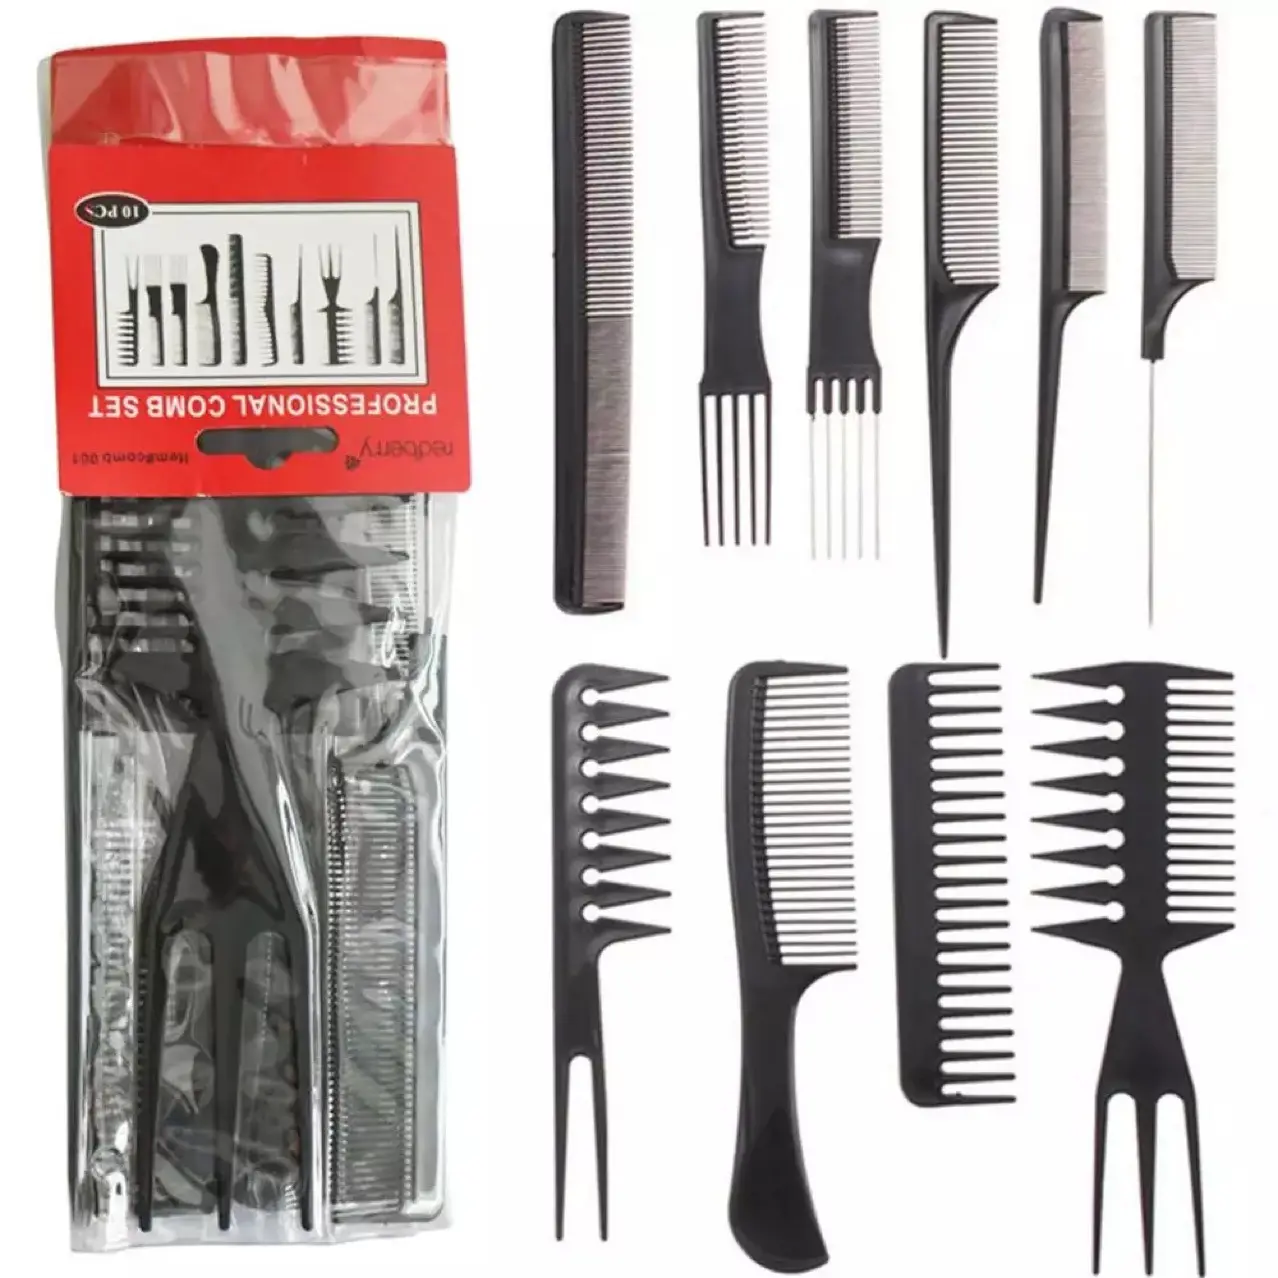 Professional 10 Pcs Black Salon Hair Styling Hairdressing Plastic Barbers Beauty Hair Brush Combs Set